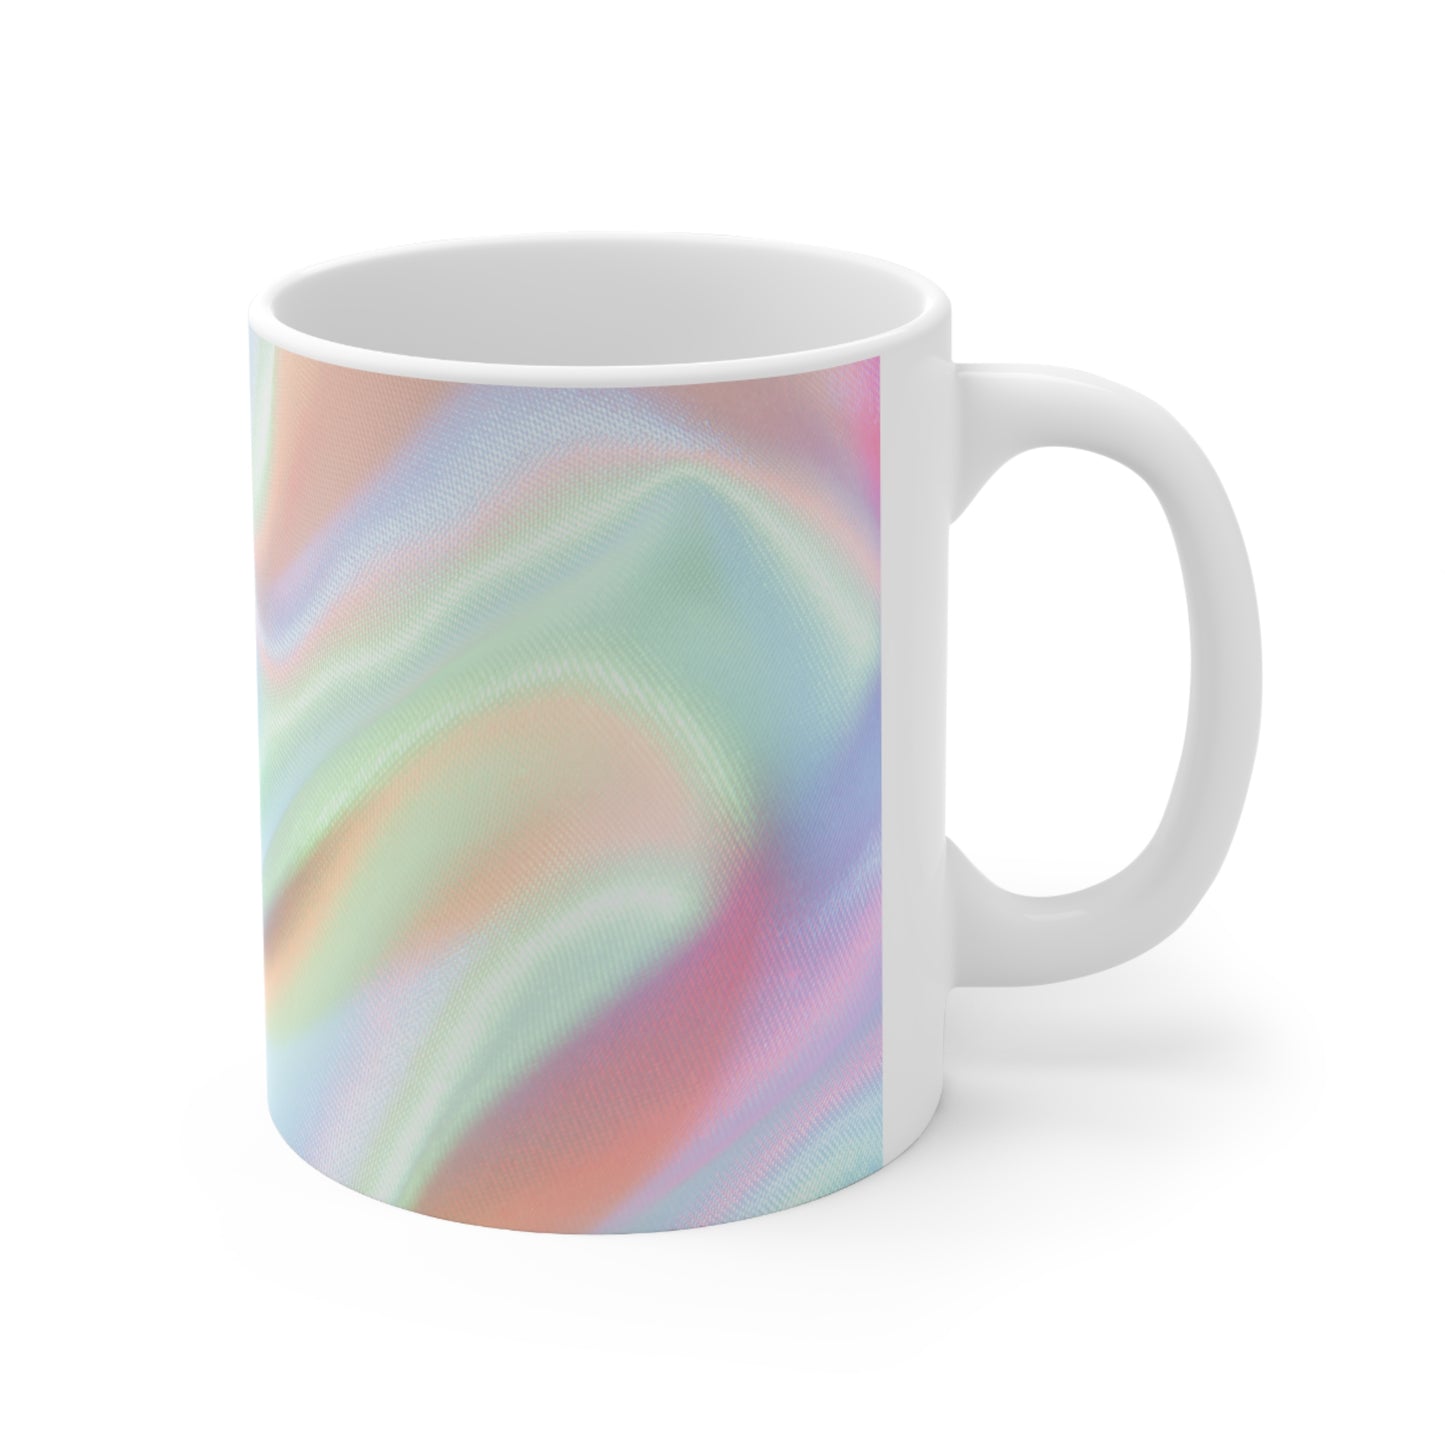 Vibrant Mosaics - The Alien Ceramic Mug 11oz